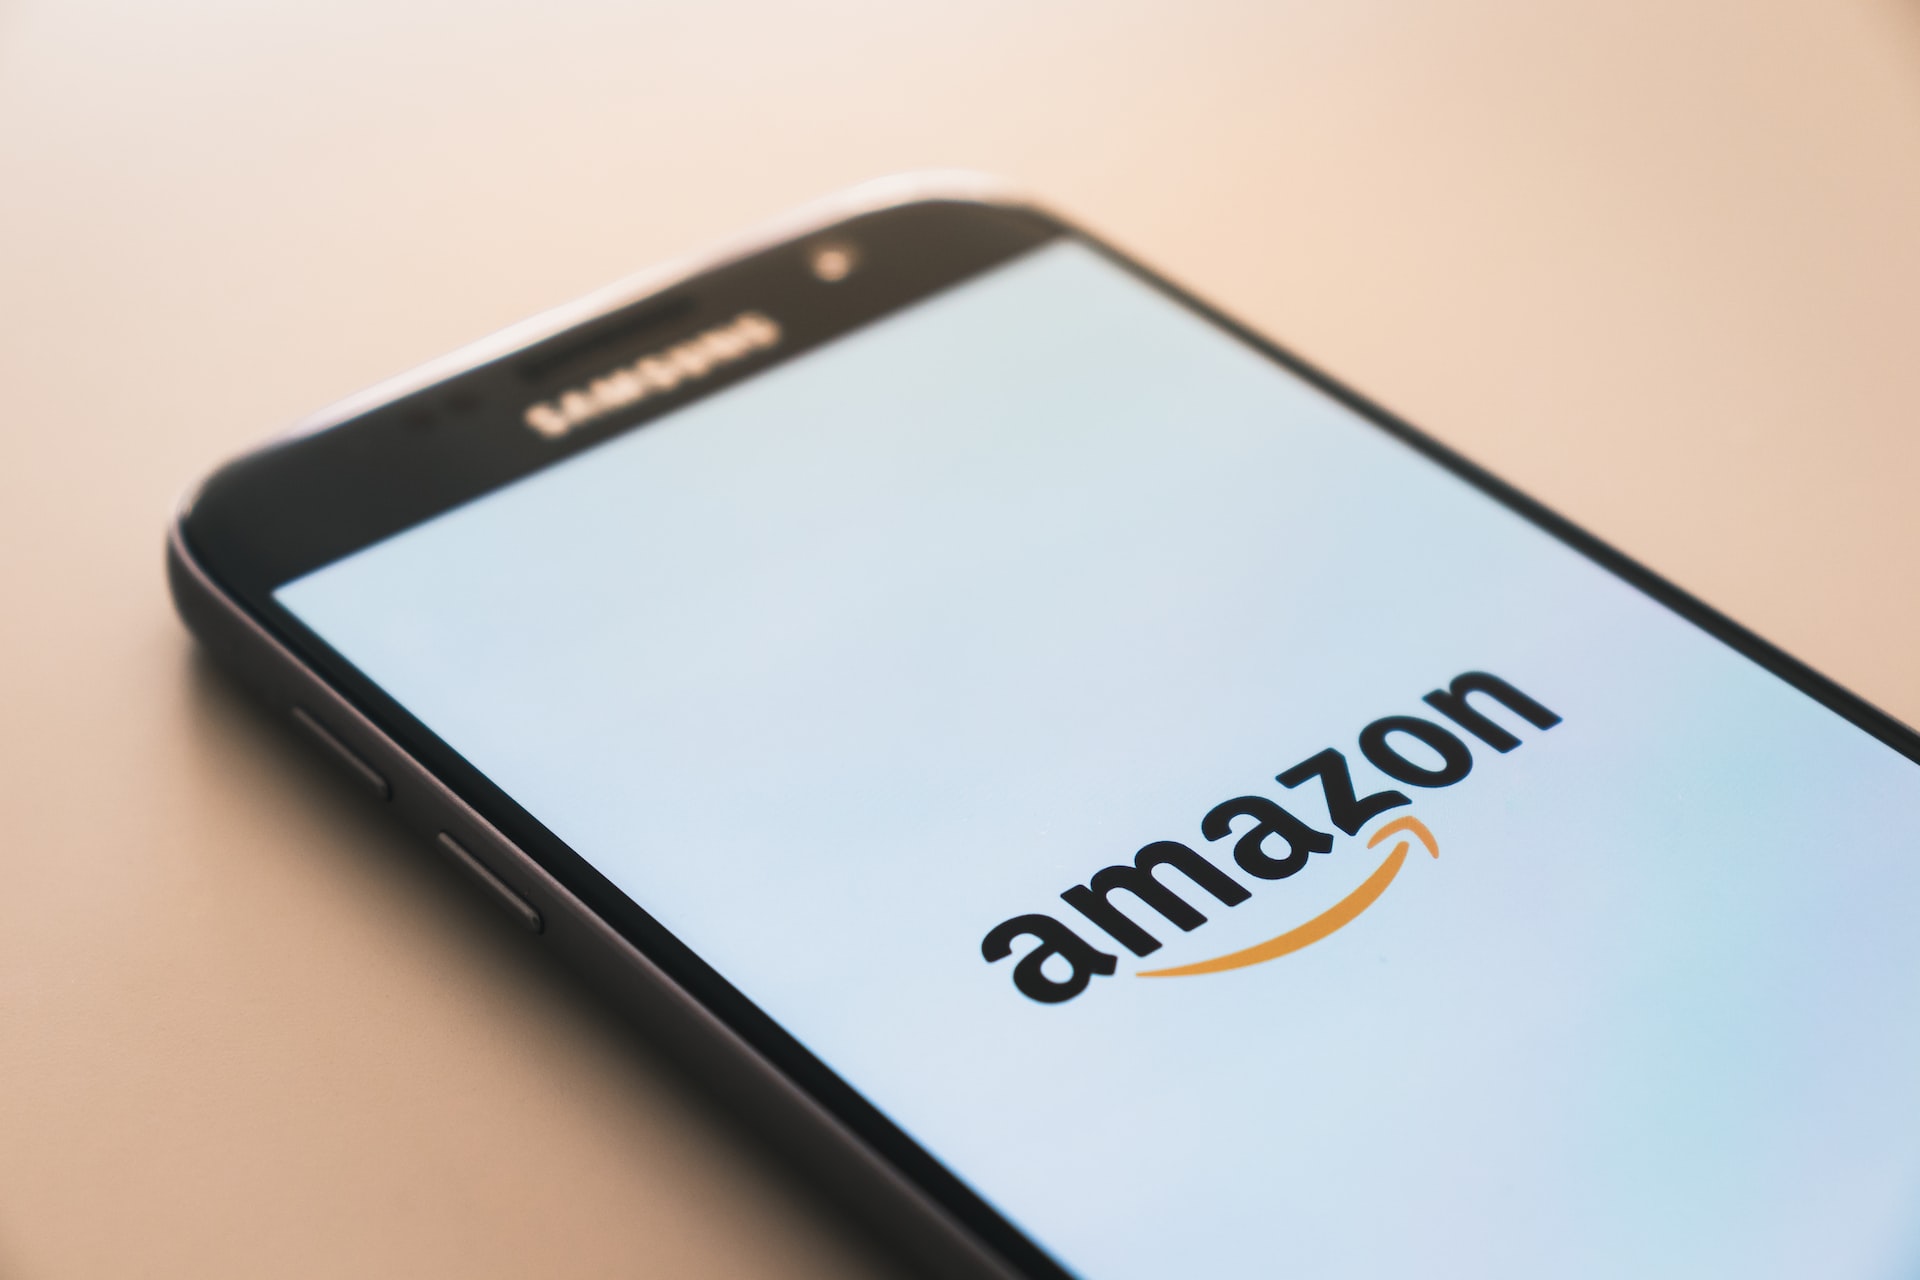 Amazon: A good business move